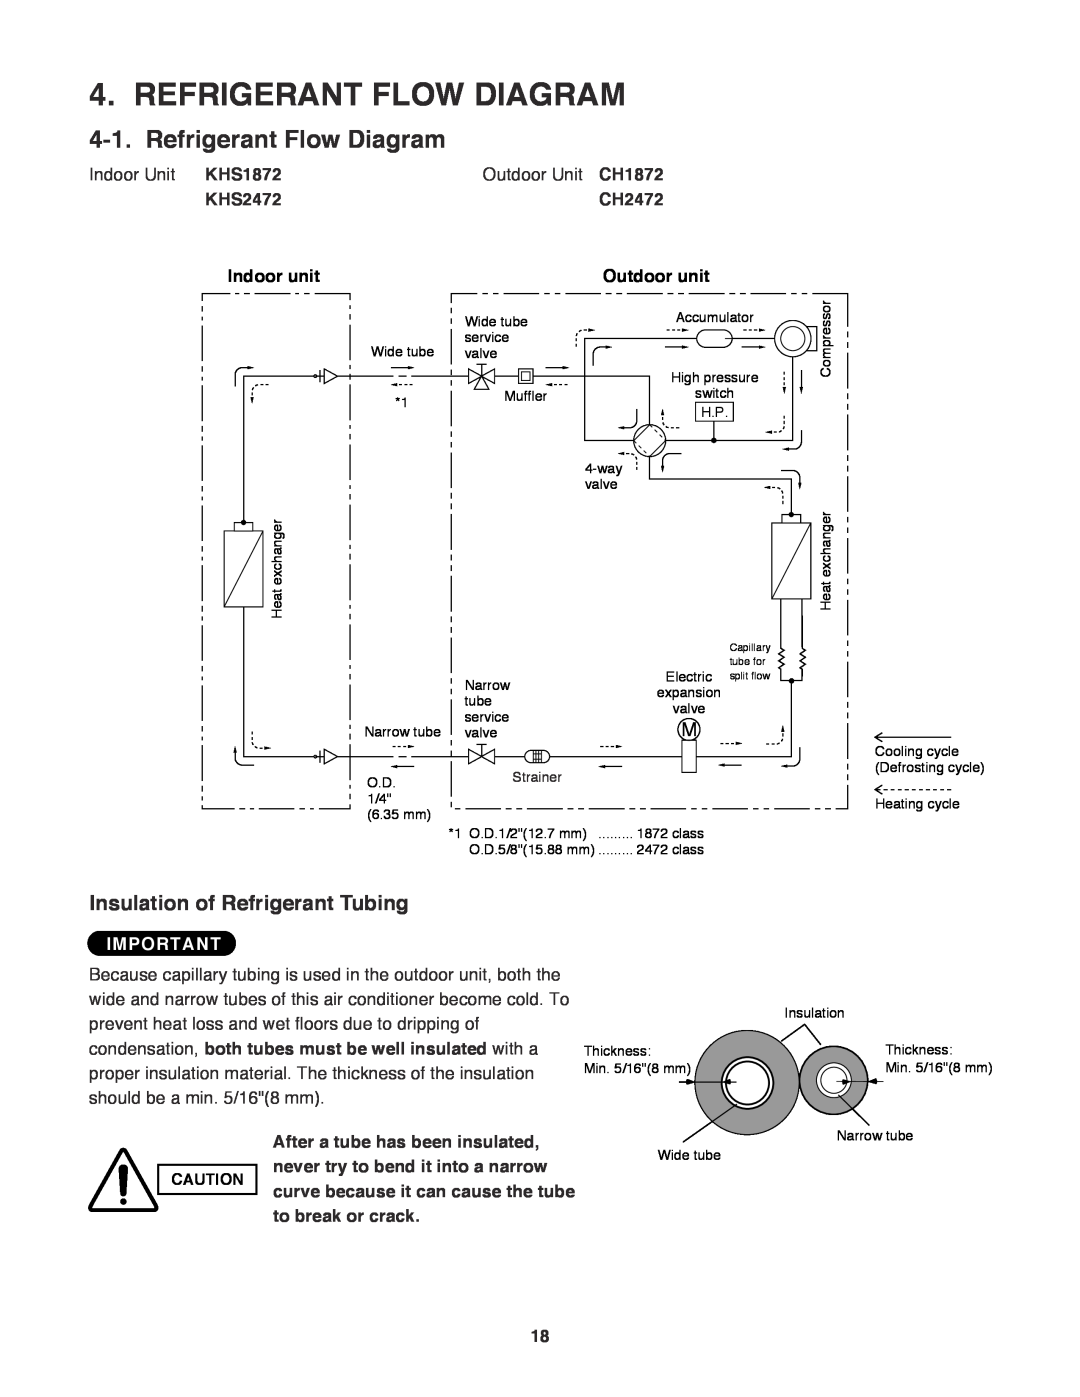 Sanyo CH2472, CH1872 service manual Refrigerant Flow Diagram, Insulation of Refrigerant Tubing 